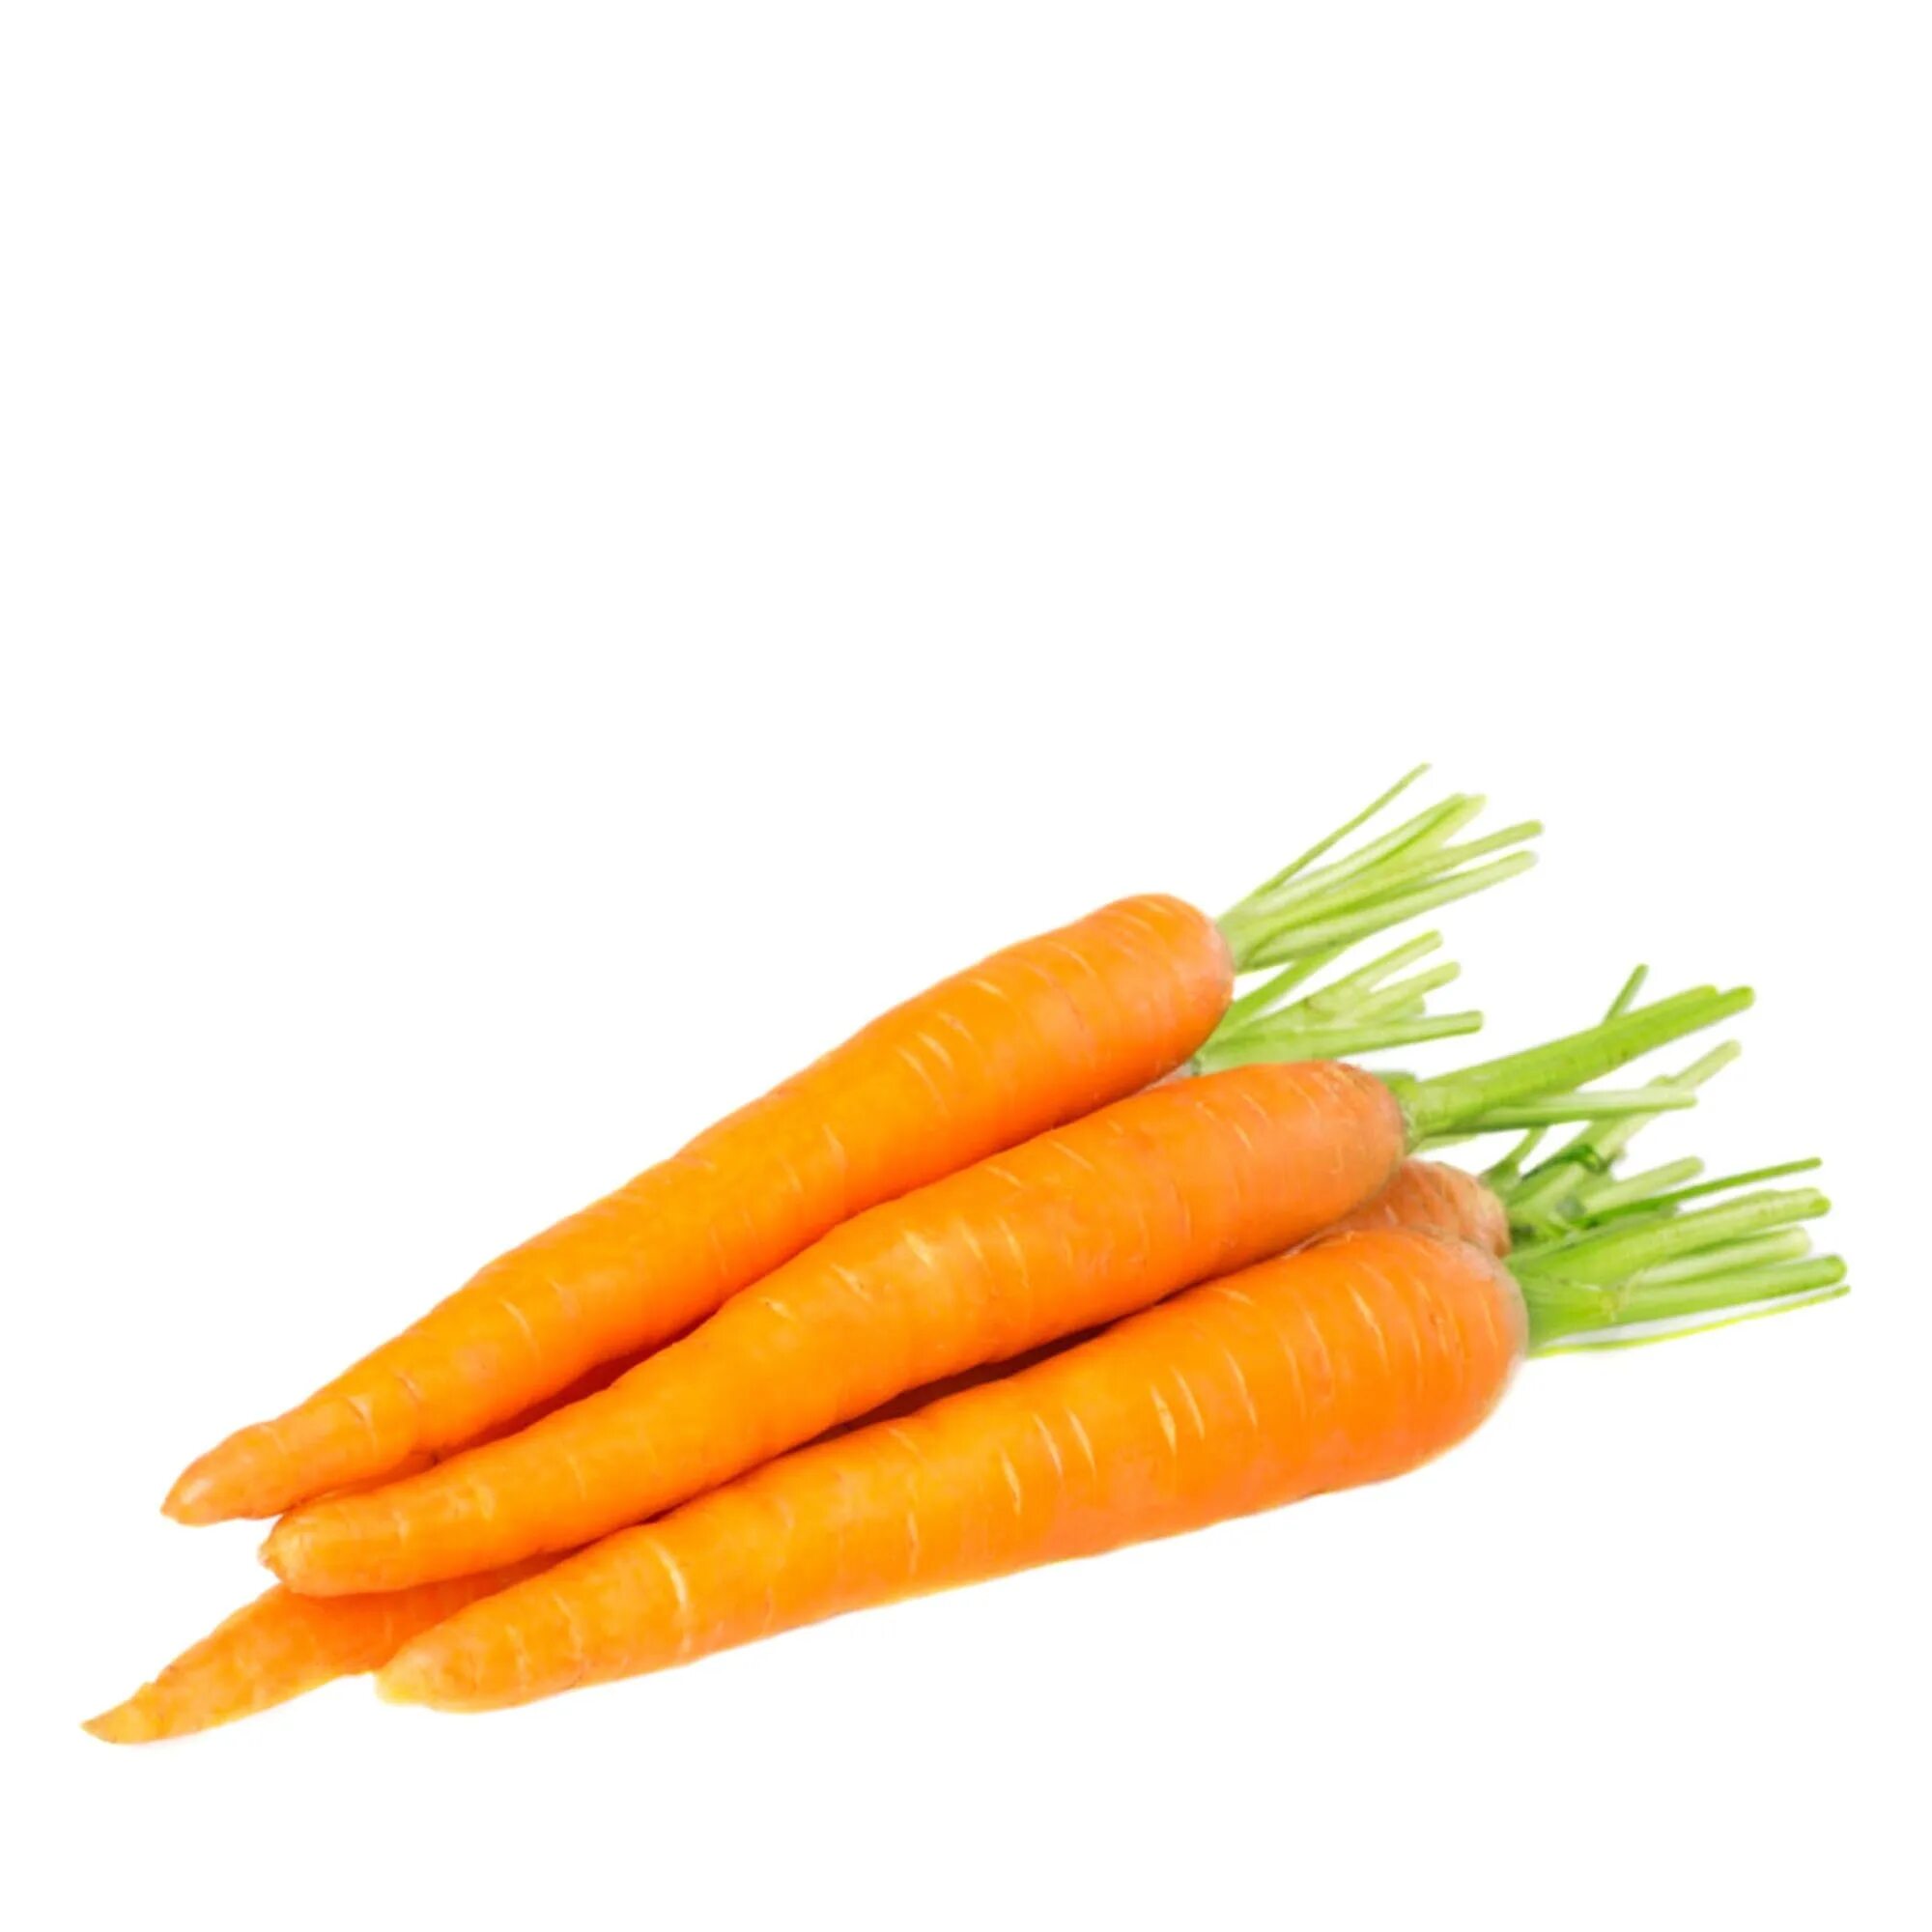 Carrot vegetable. Морковь. Сидит девица в темнице а коса на улице. Морковь на белом фоне. Морковка на белом фоне.